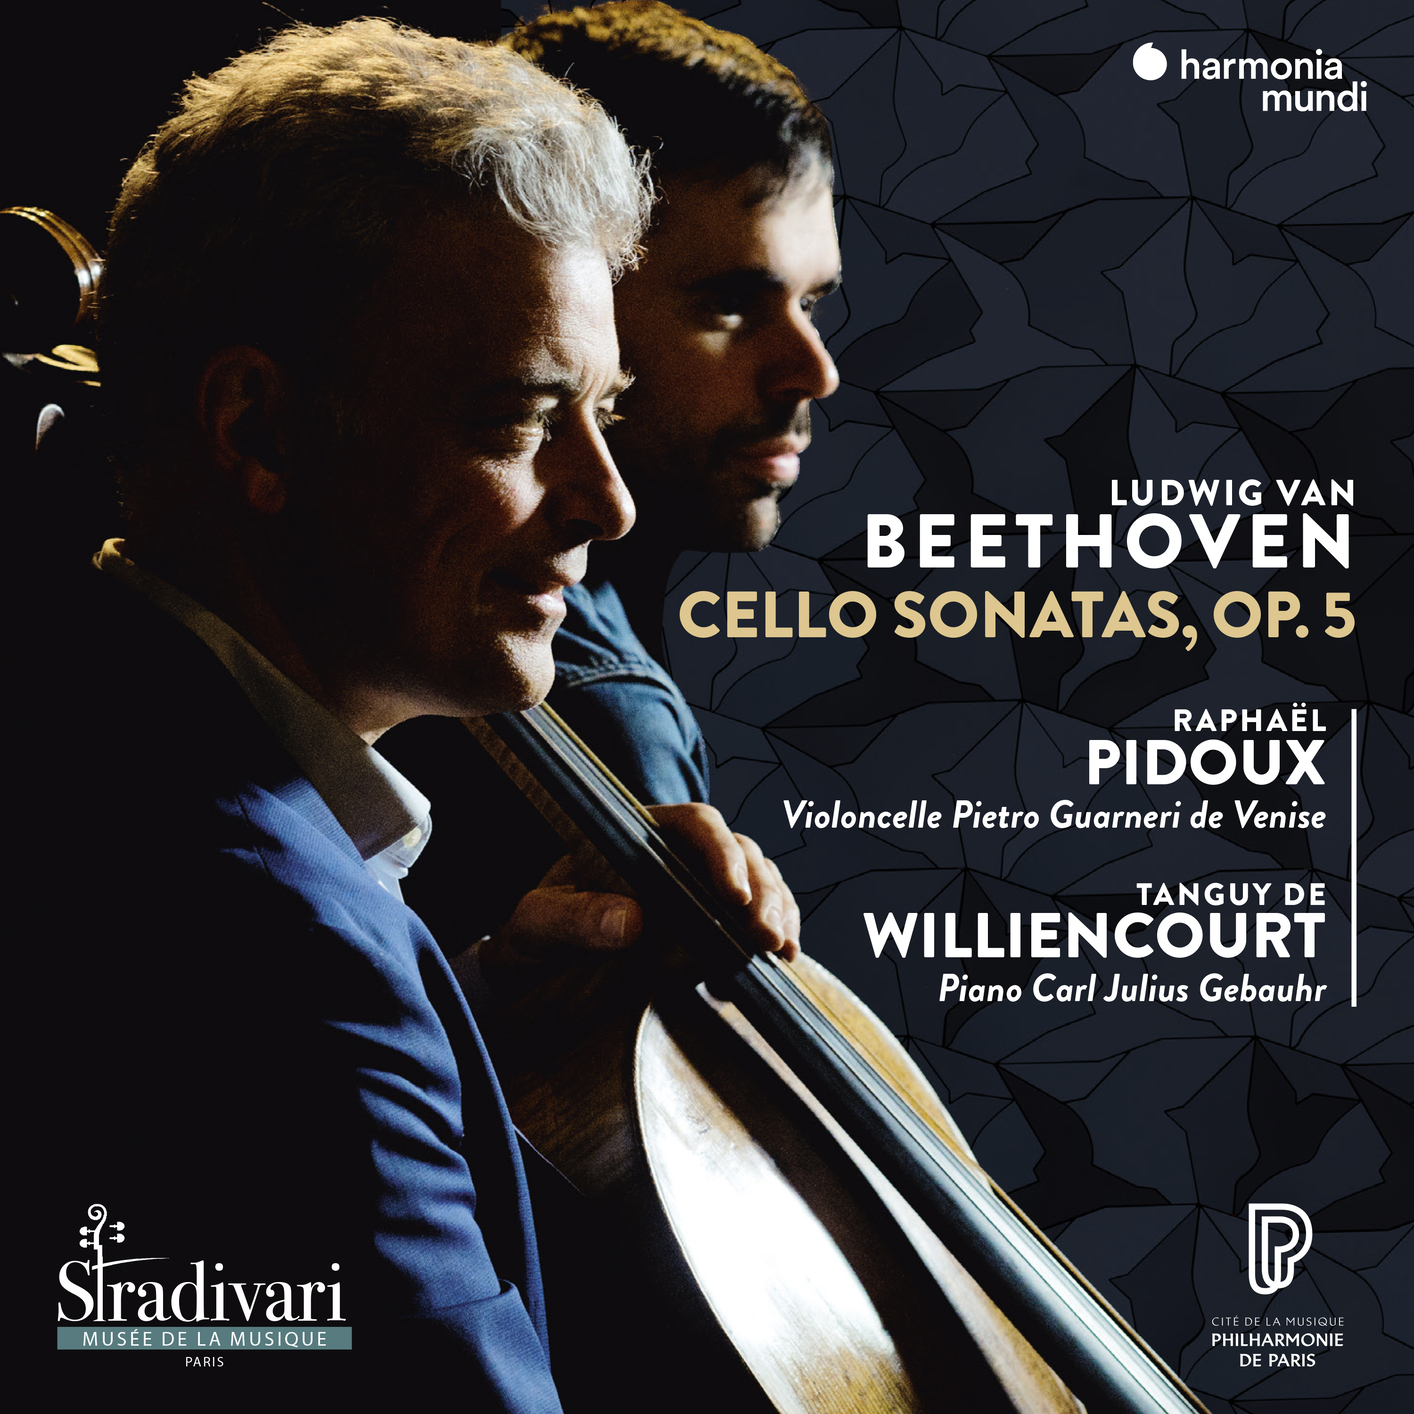 Tanguy de Williencourt & Raphael Pidoux - Beethoven - Cello Sonatas, Op. 5 (2021) [FLAC 24bit/96kHz]